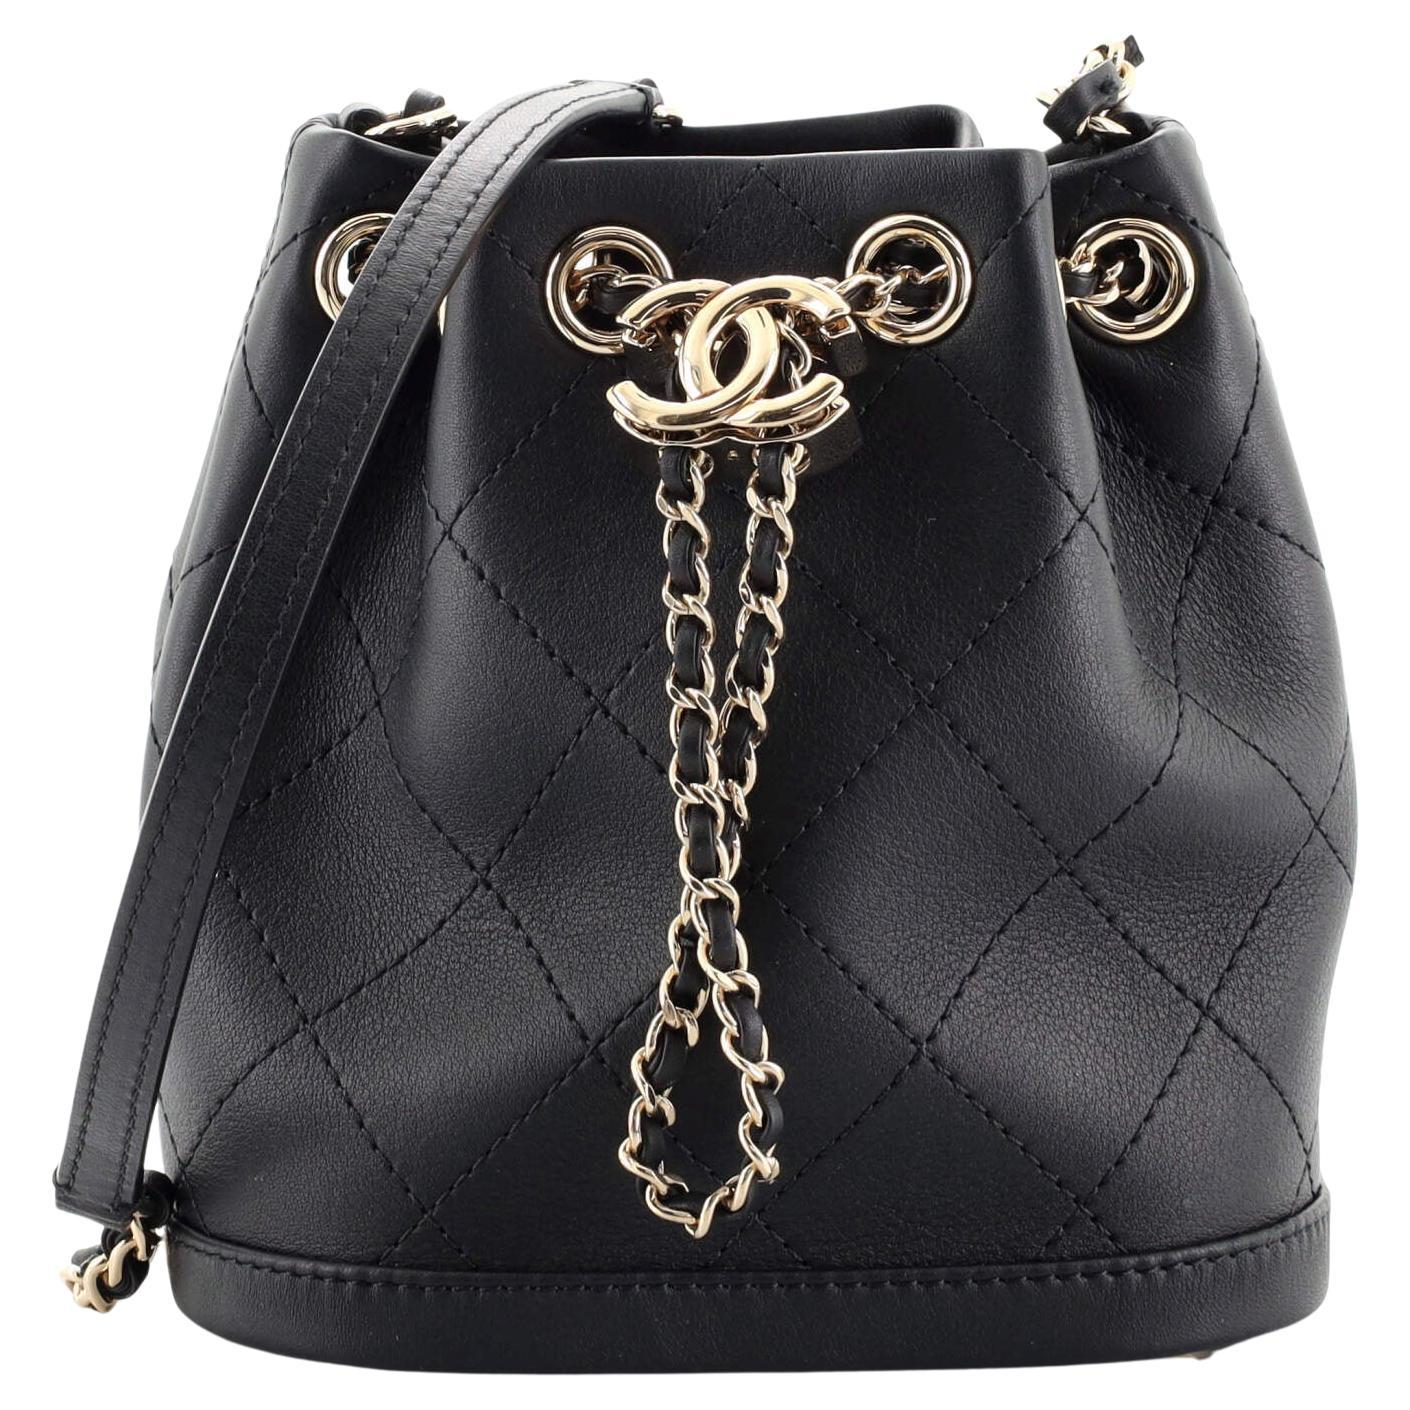 Chanel Pre-owned 2014-2015 Fringed Denim Bucket Bag - Blue